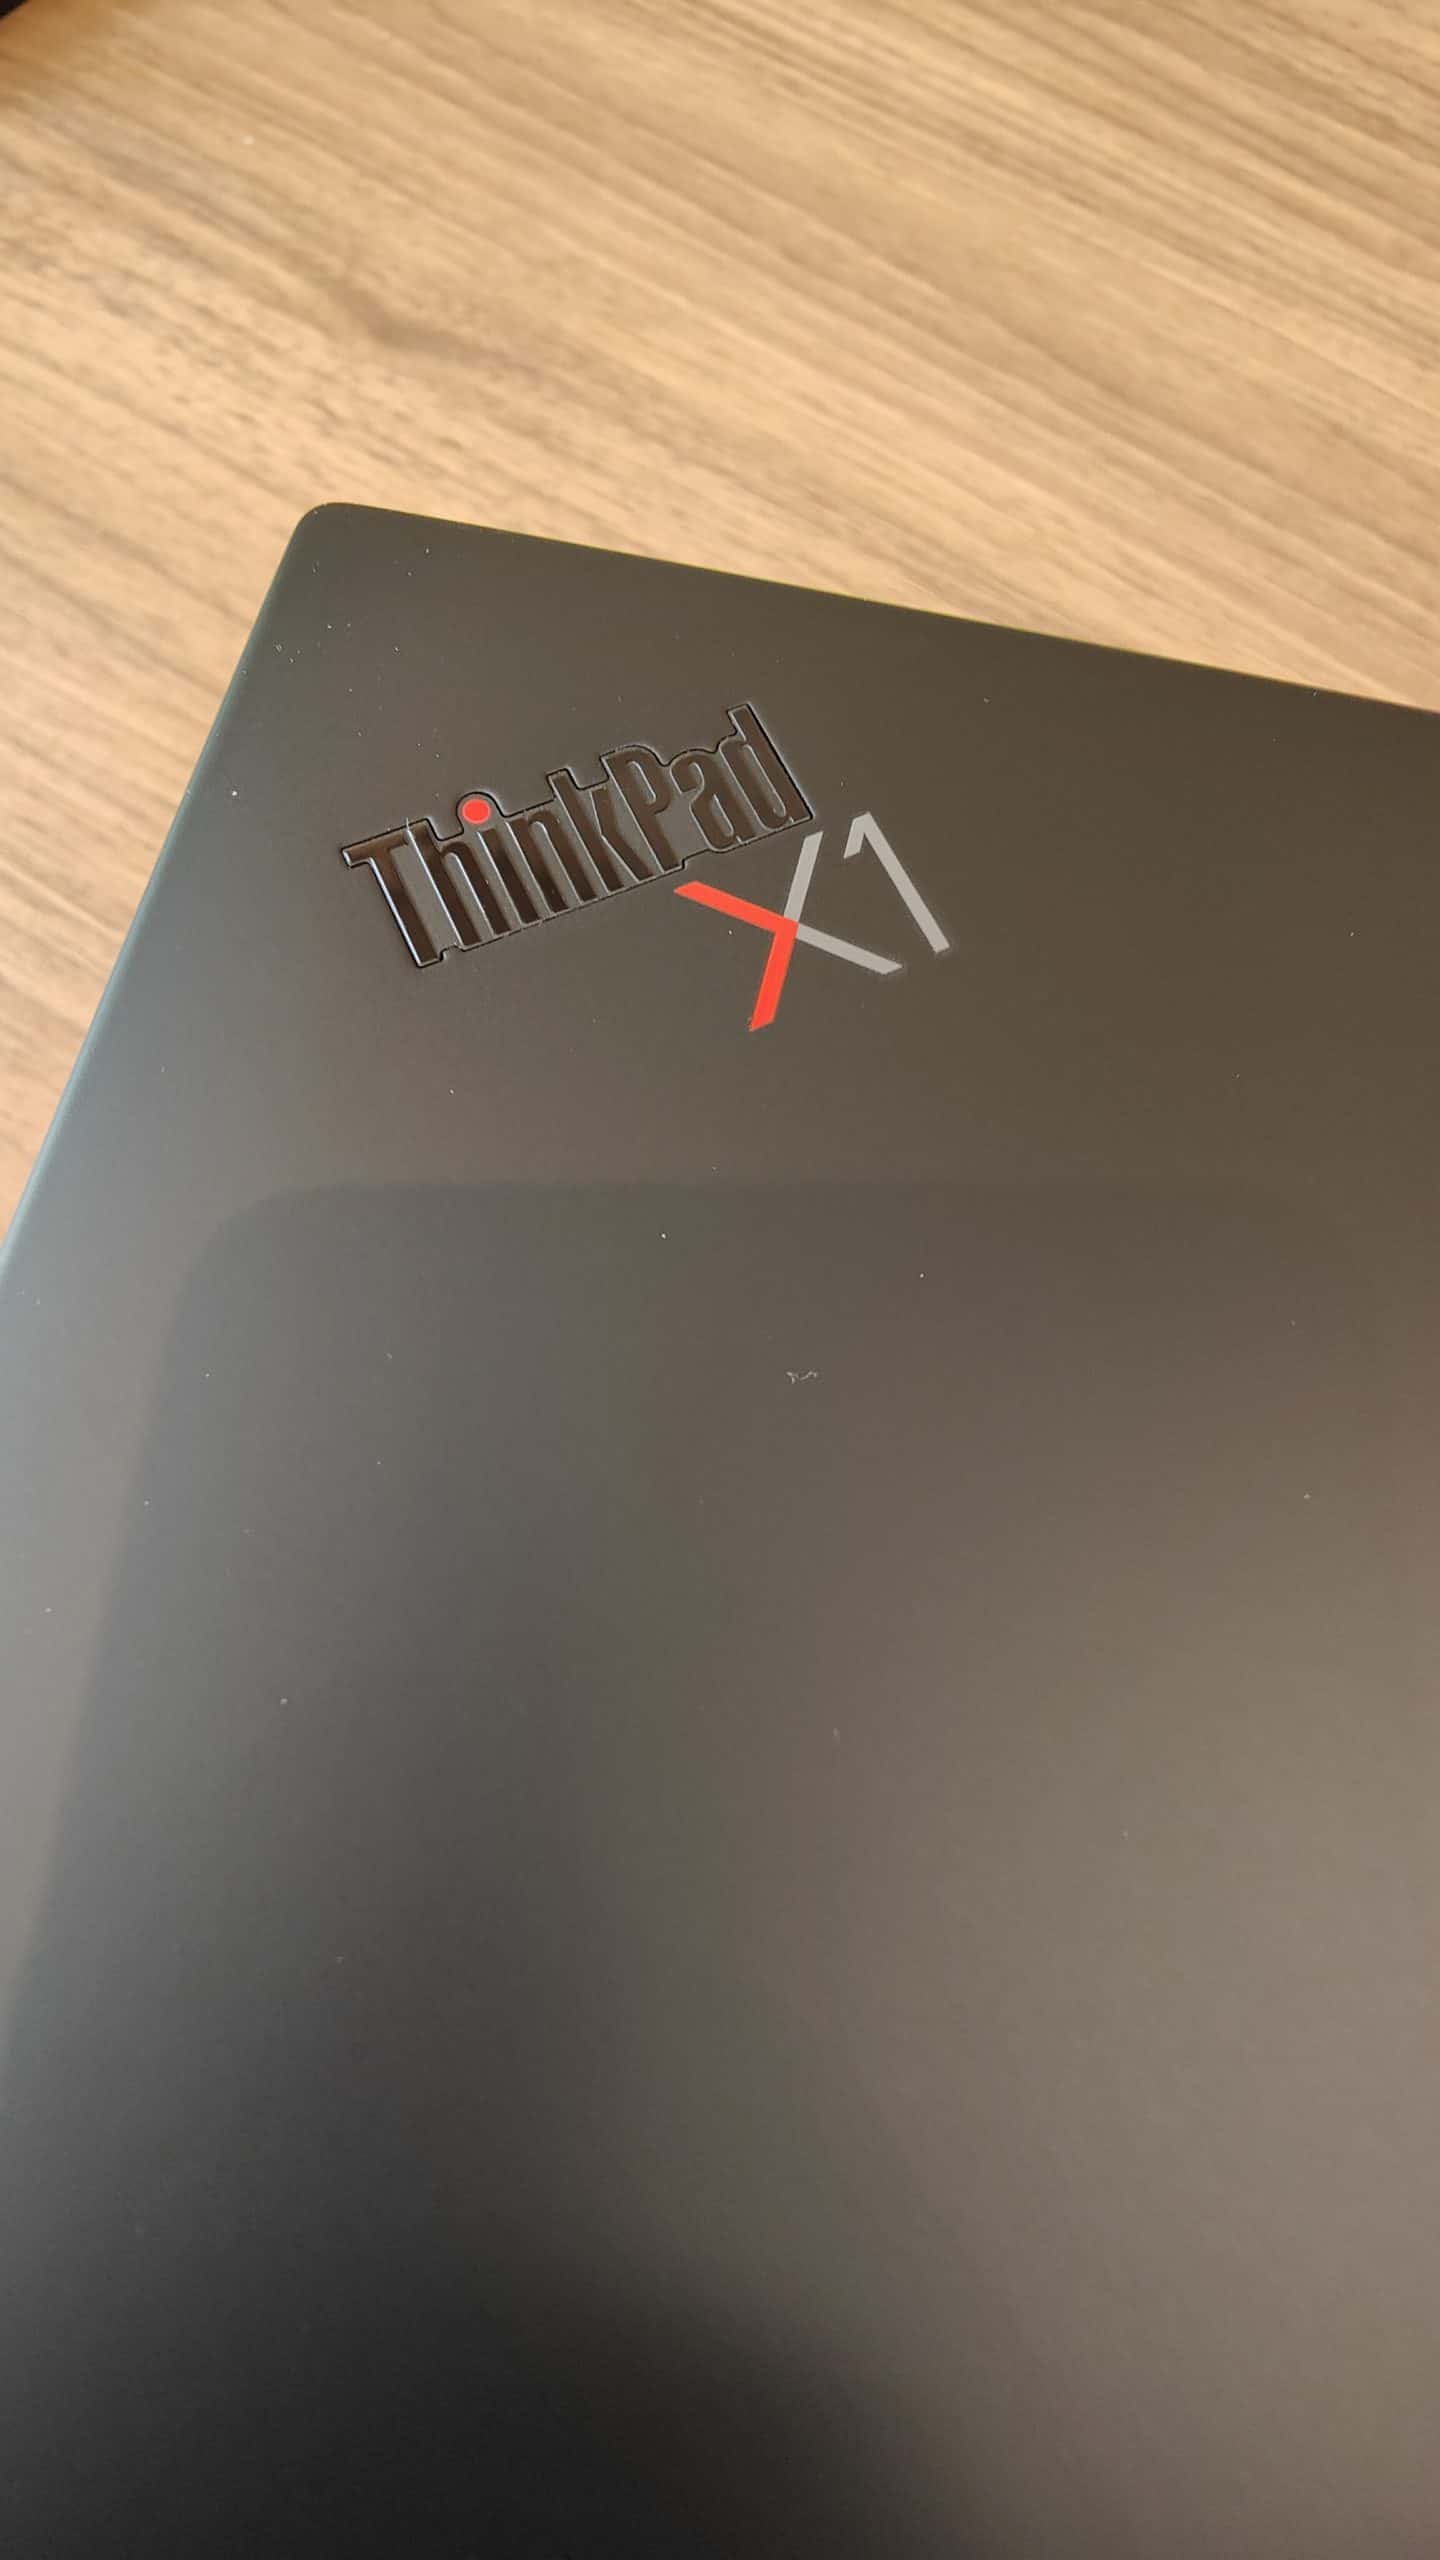 Thinkpad X1 Carbon - Un logo plein de nostalgie, non?